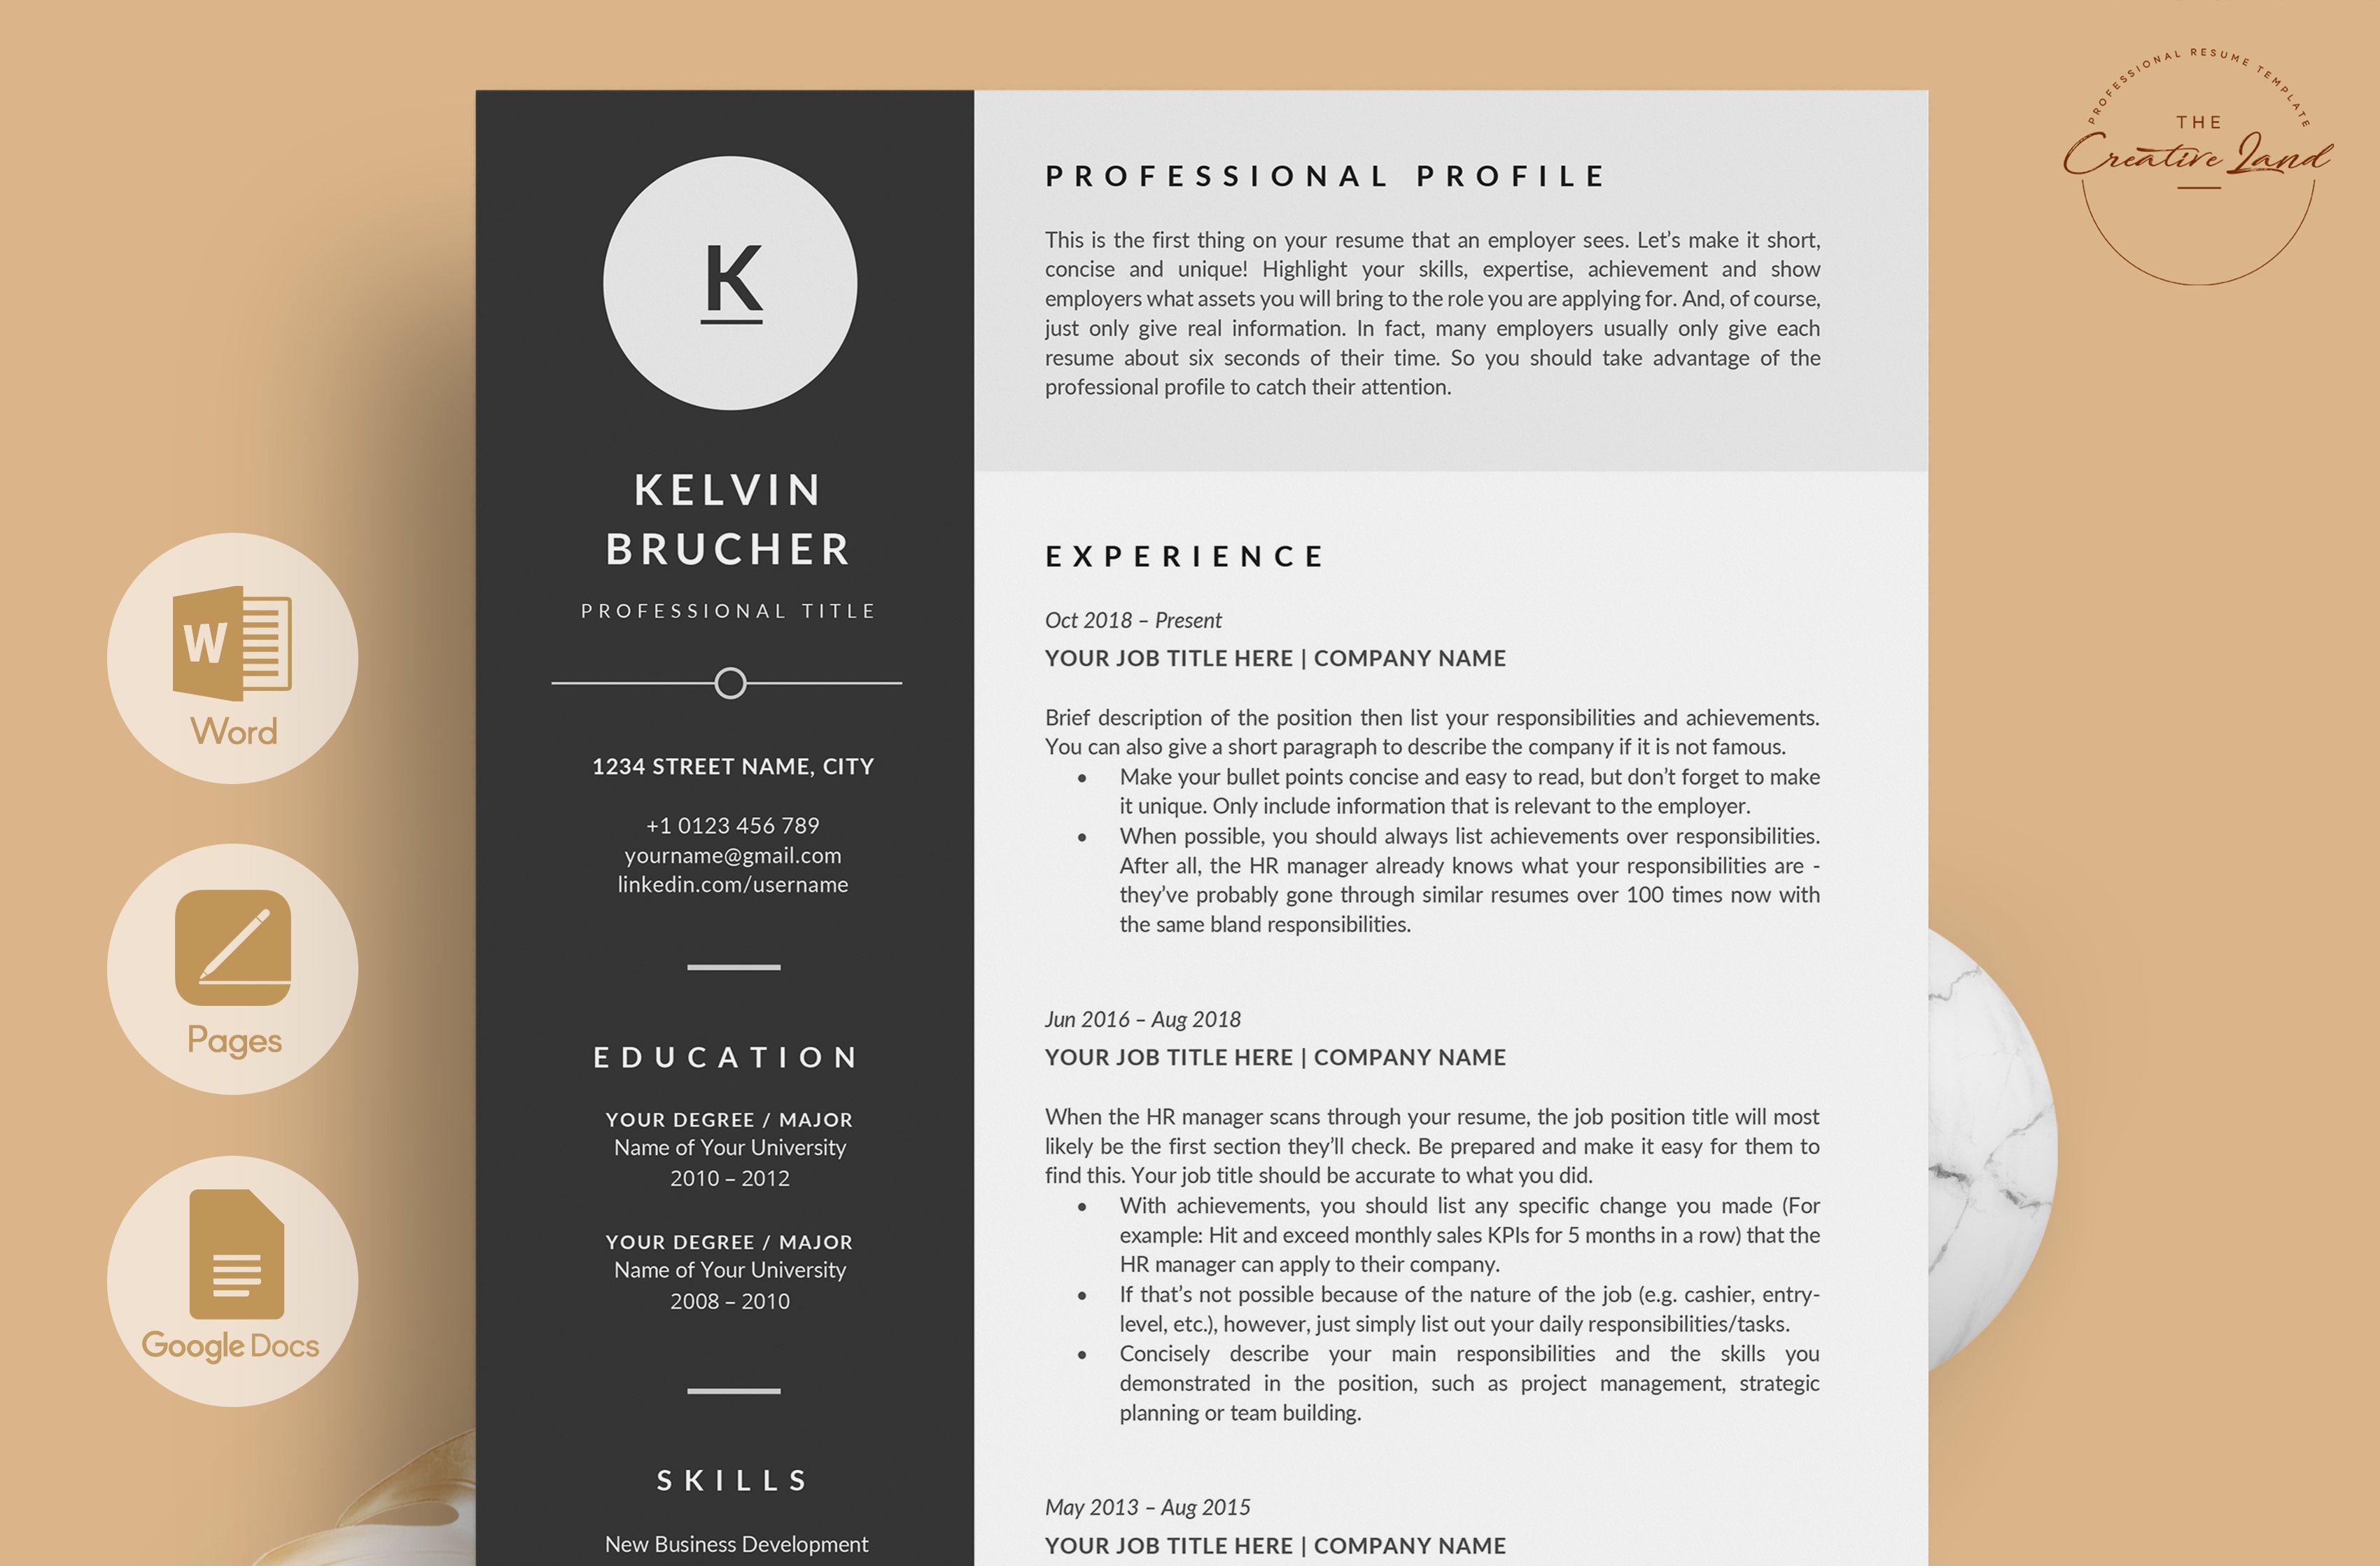 Resume/CV - The Kelvin cover image.